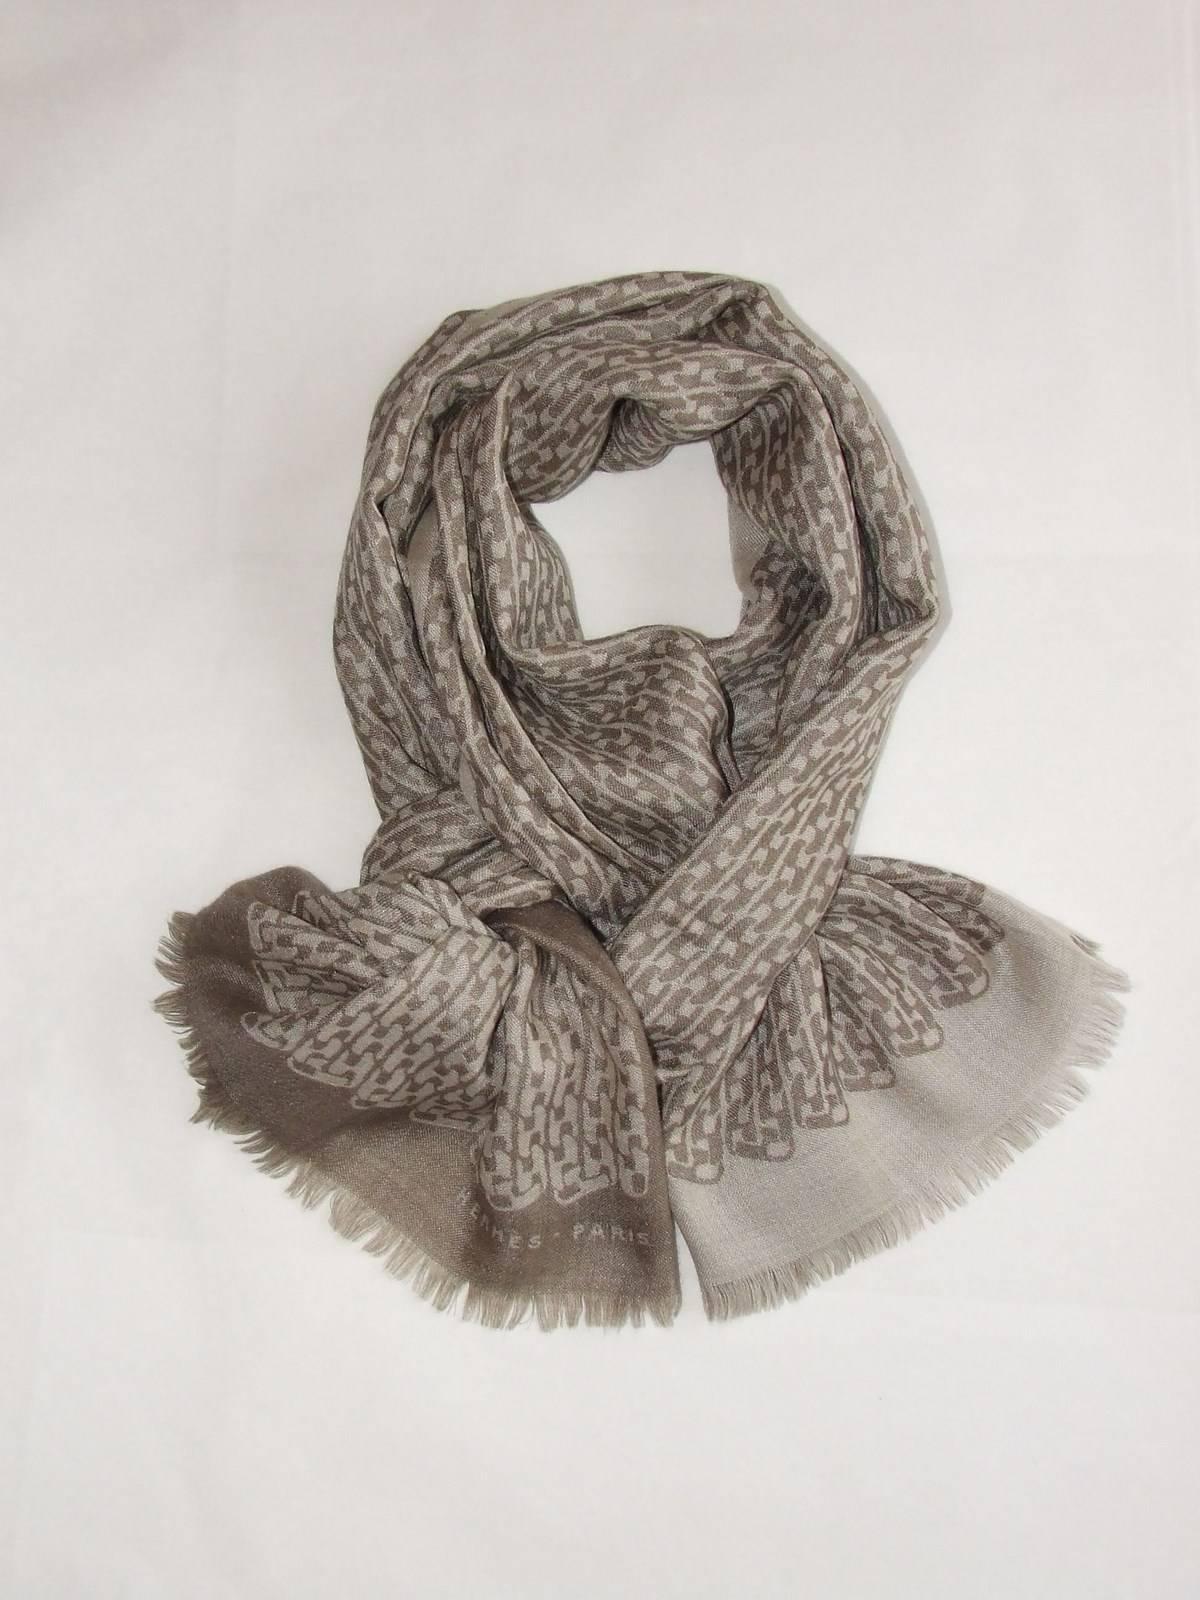 Hermes Reversible woven scarf Curb Chain Cashmere Silk Etoupe Beige 186 cm 7